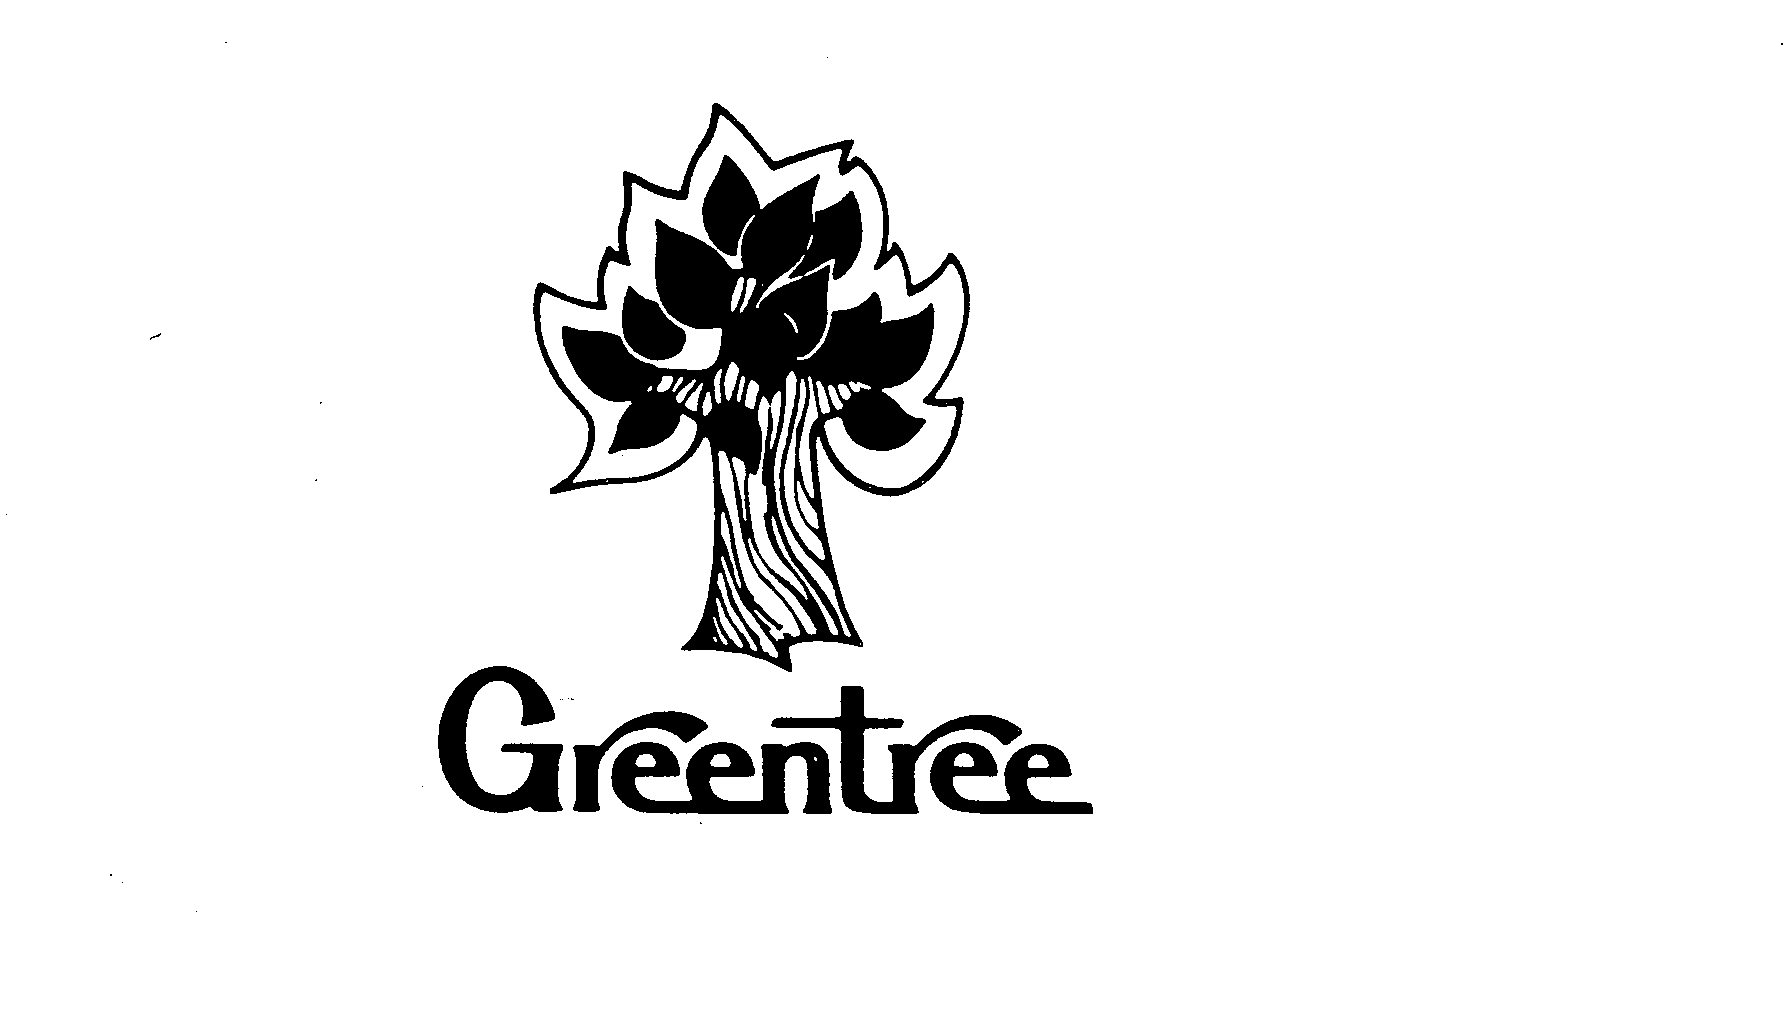 Trademark Logo GREENTREE